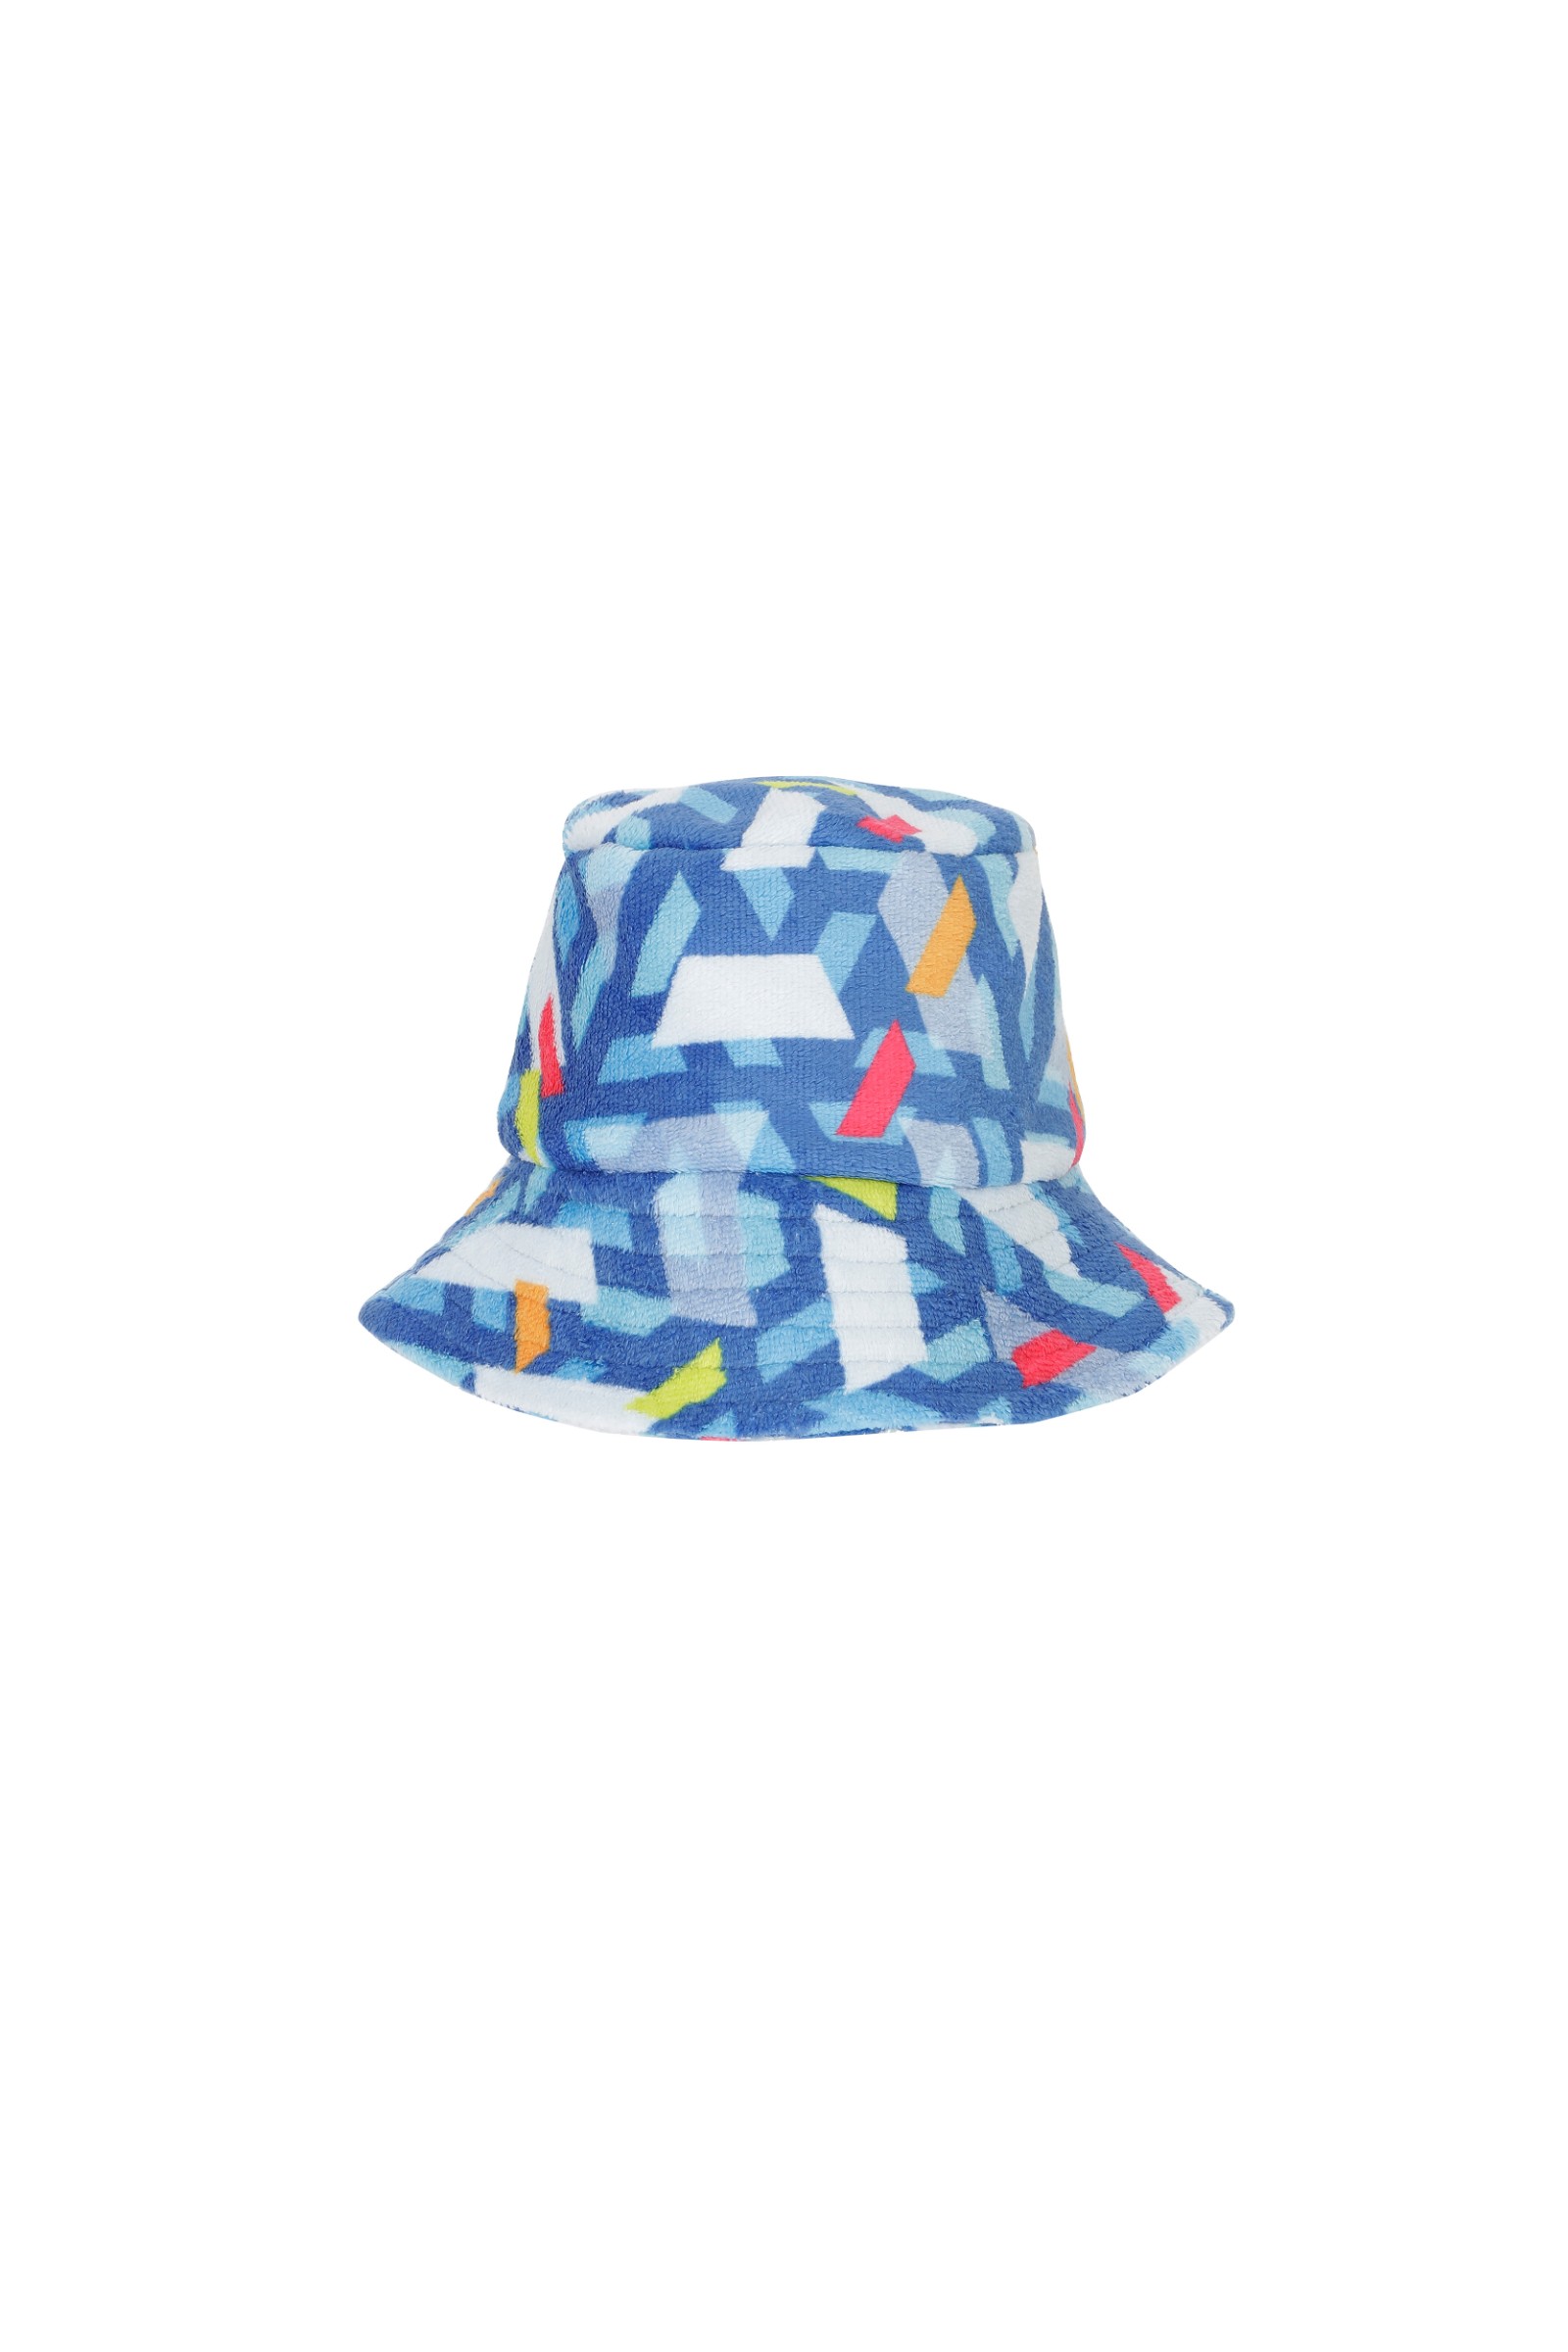 Bucko Graphic Blue Print Hat 2